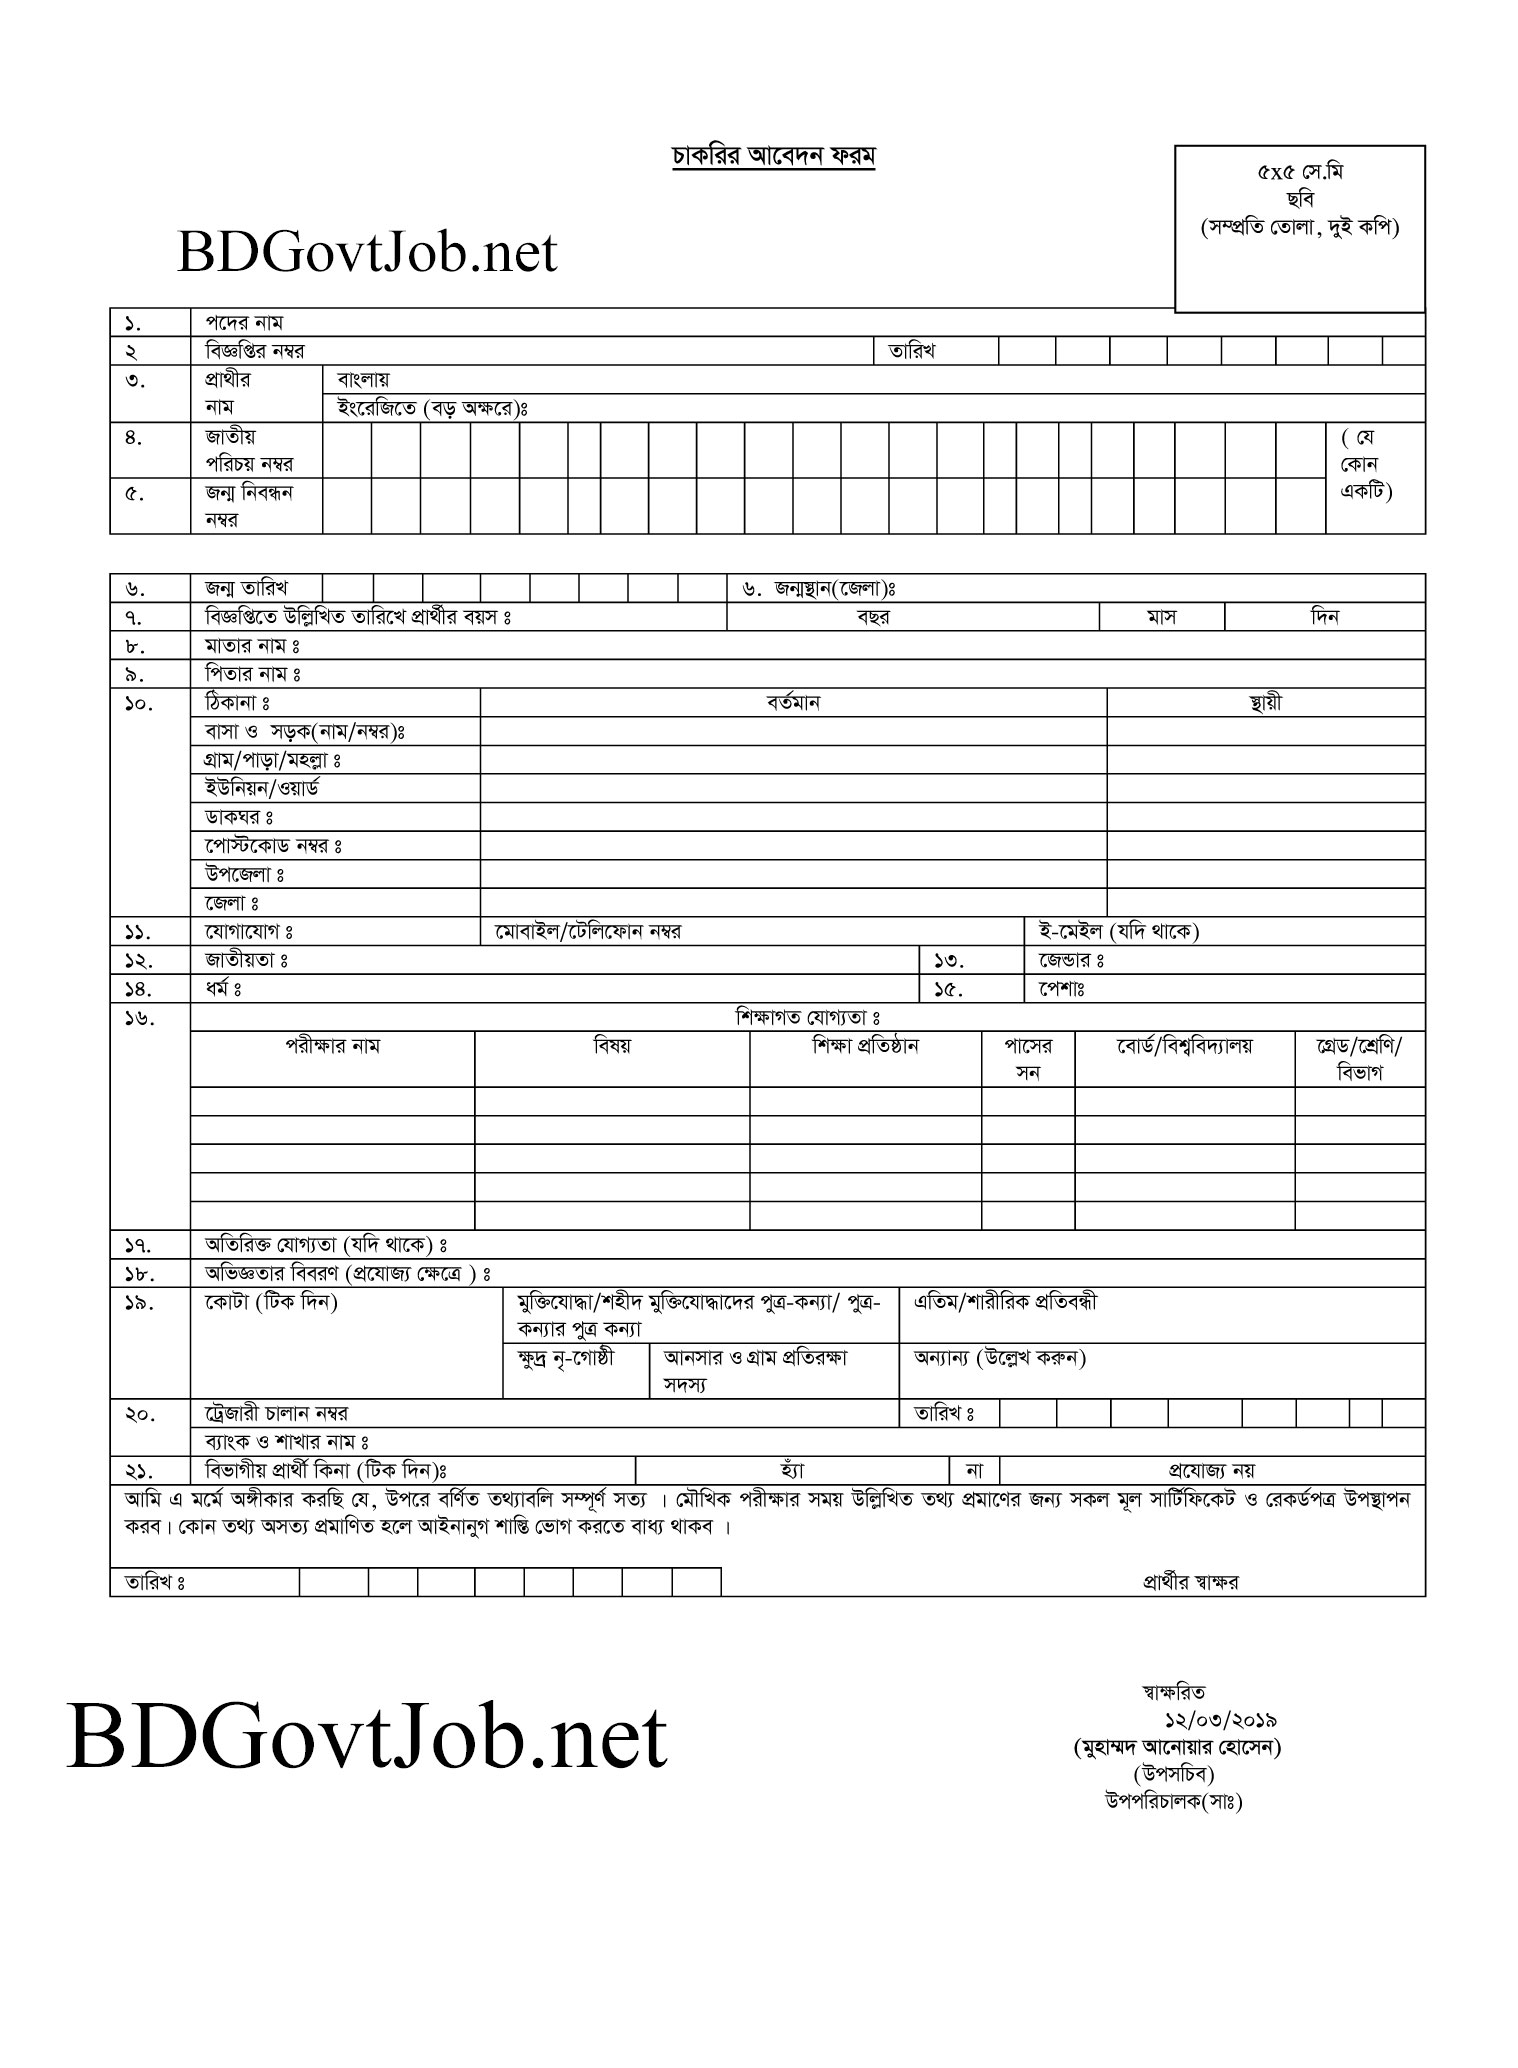 NGO Affairs Bureau Job Application form